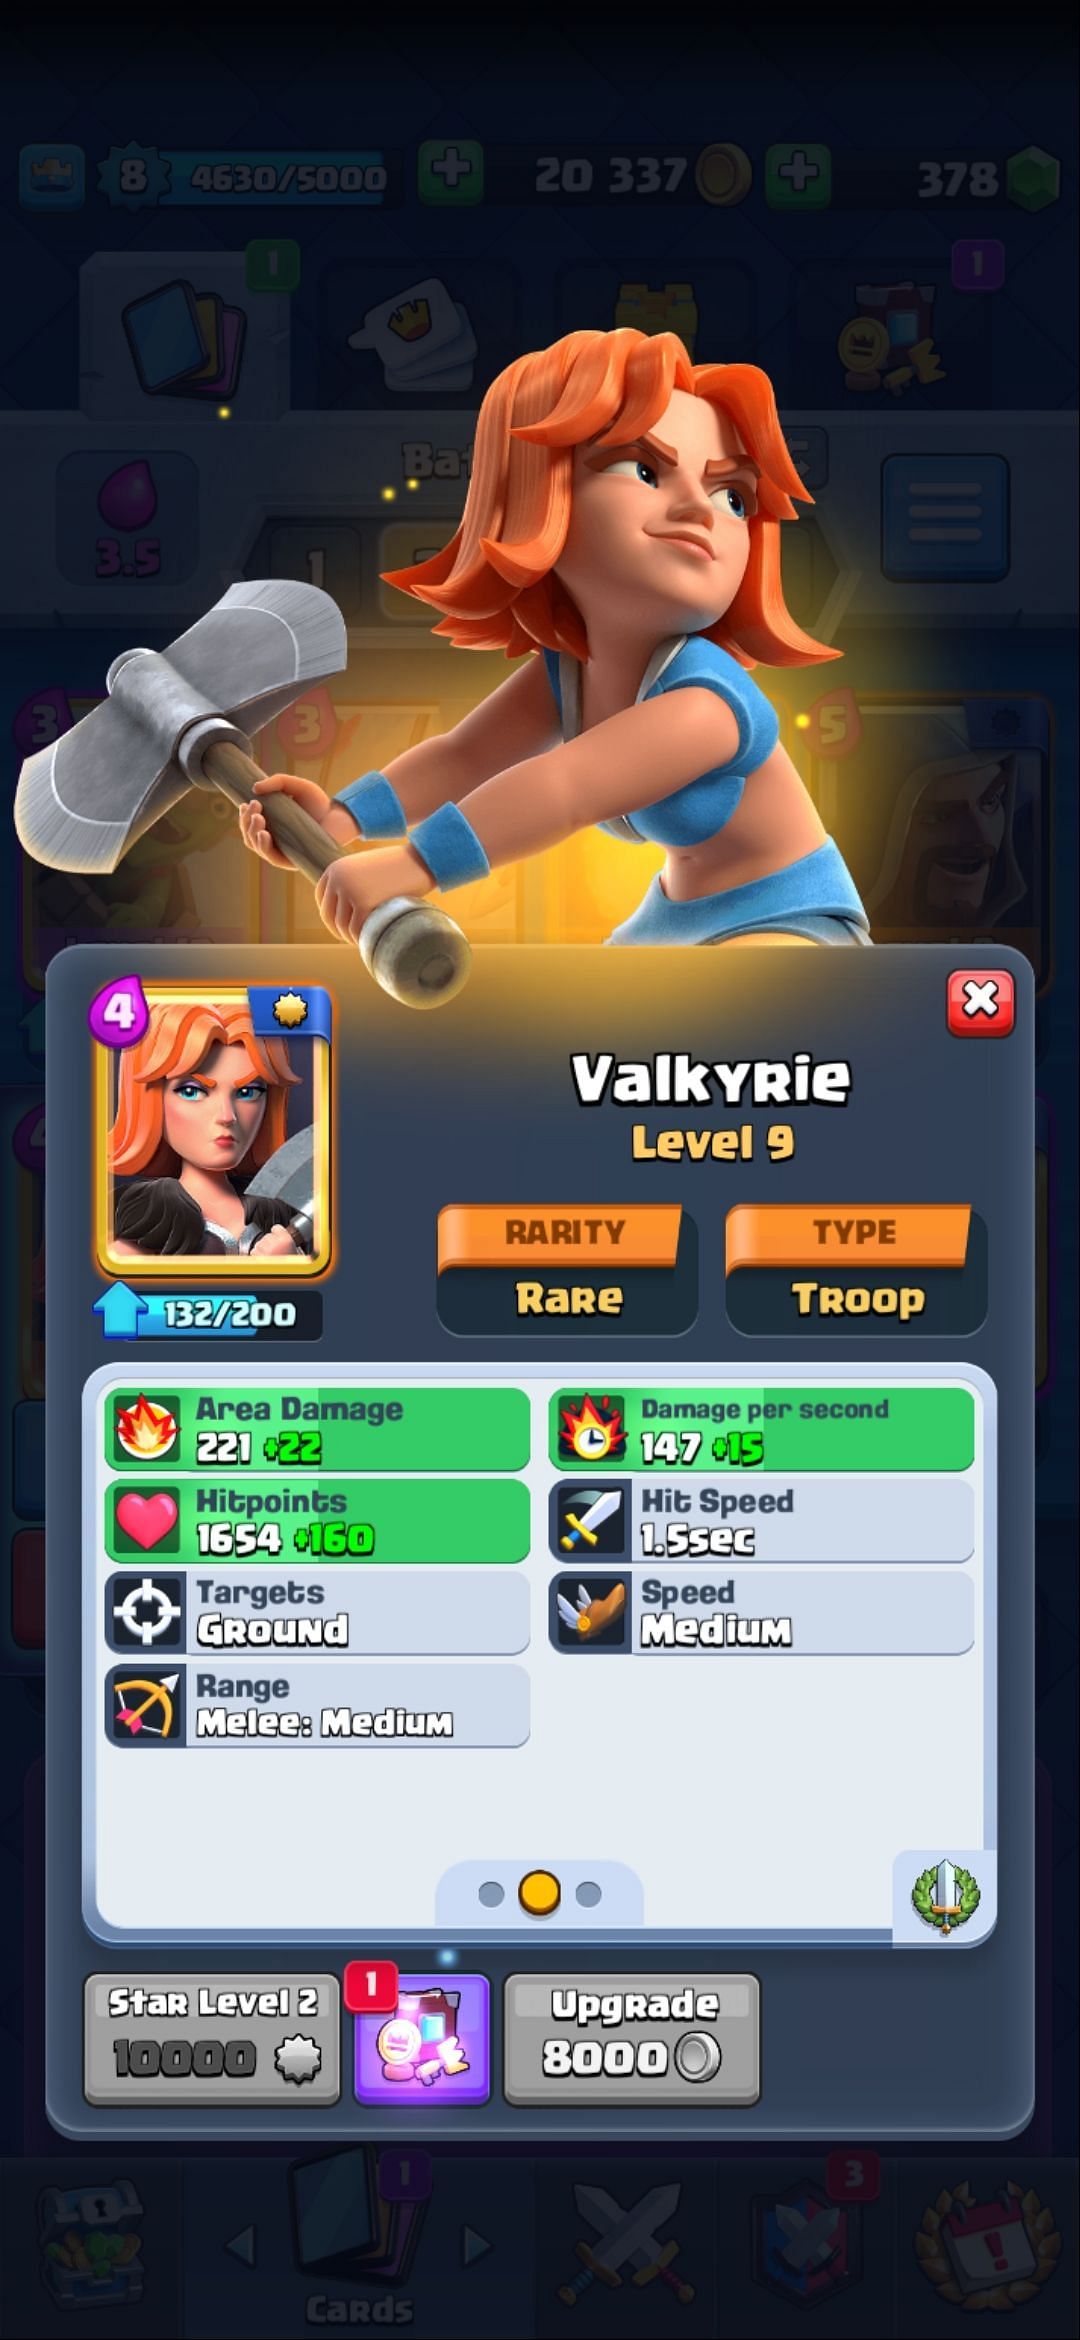 The Valkyrie card in Clash Royale (Image via Sportskeeda)